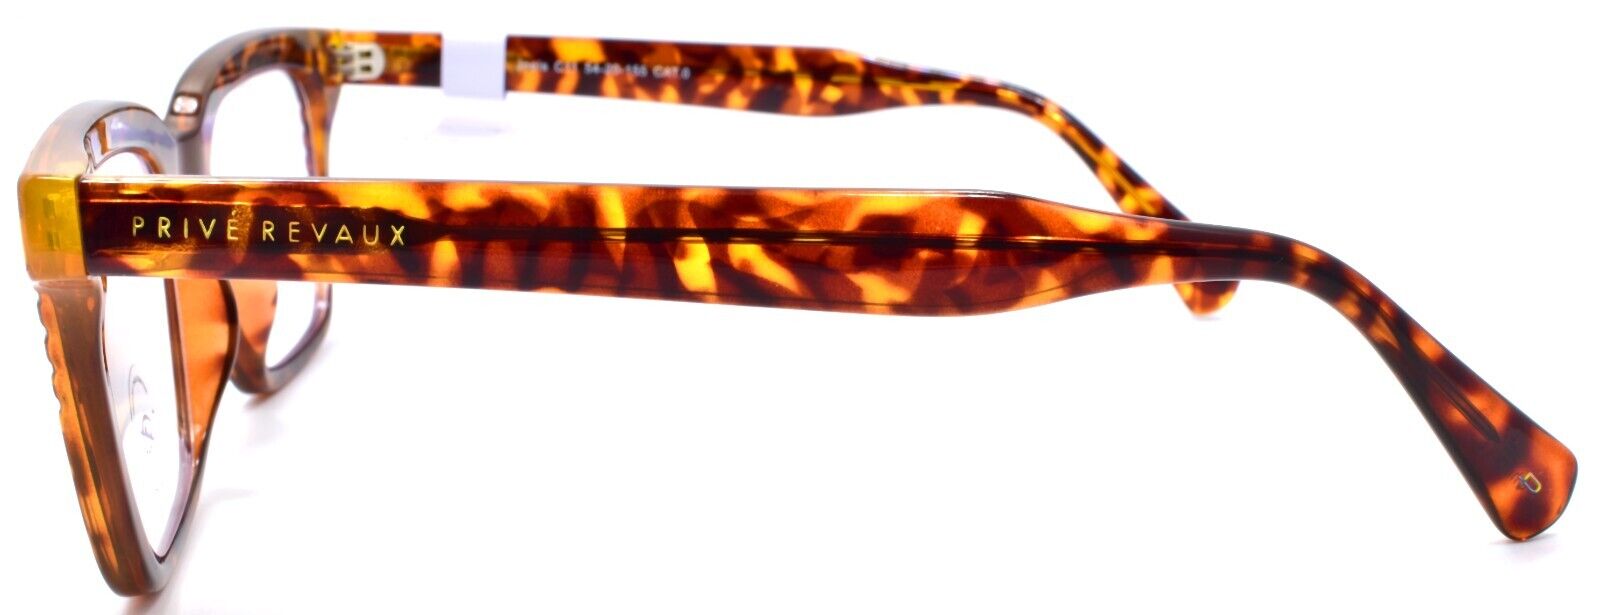 3-Prive Revaux Joels Eyeglasses Frames Blue Light Blocking RX-ready Tortoise-810047310457-IKSpecs